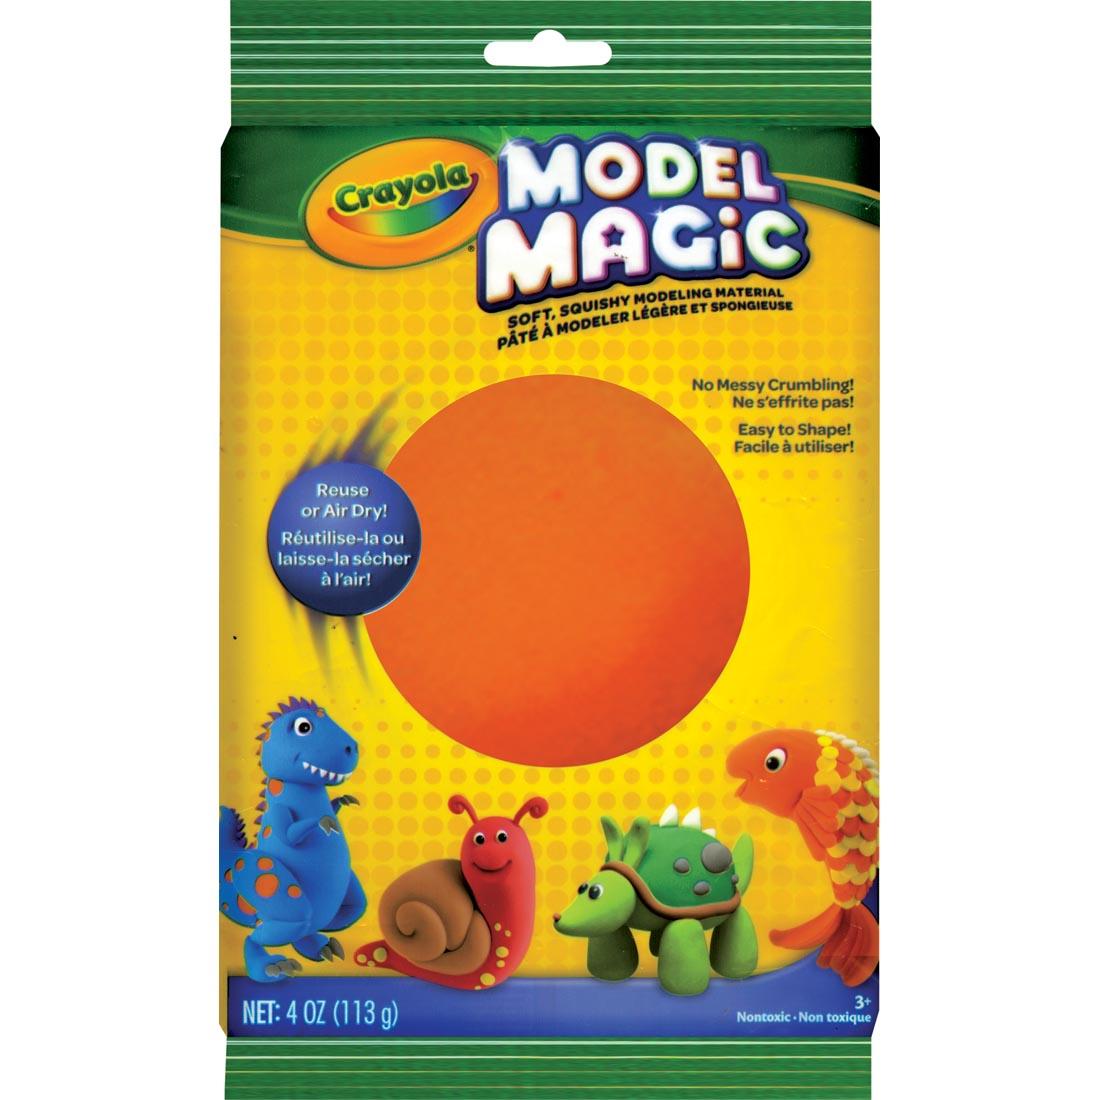 Package of Orange Crayola Model Magic